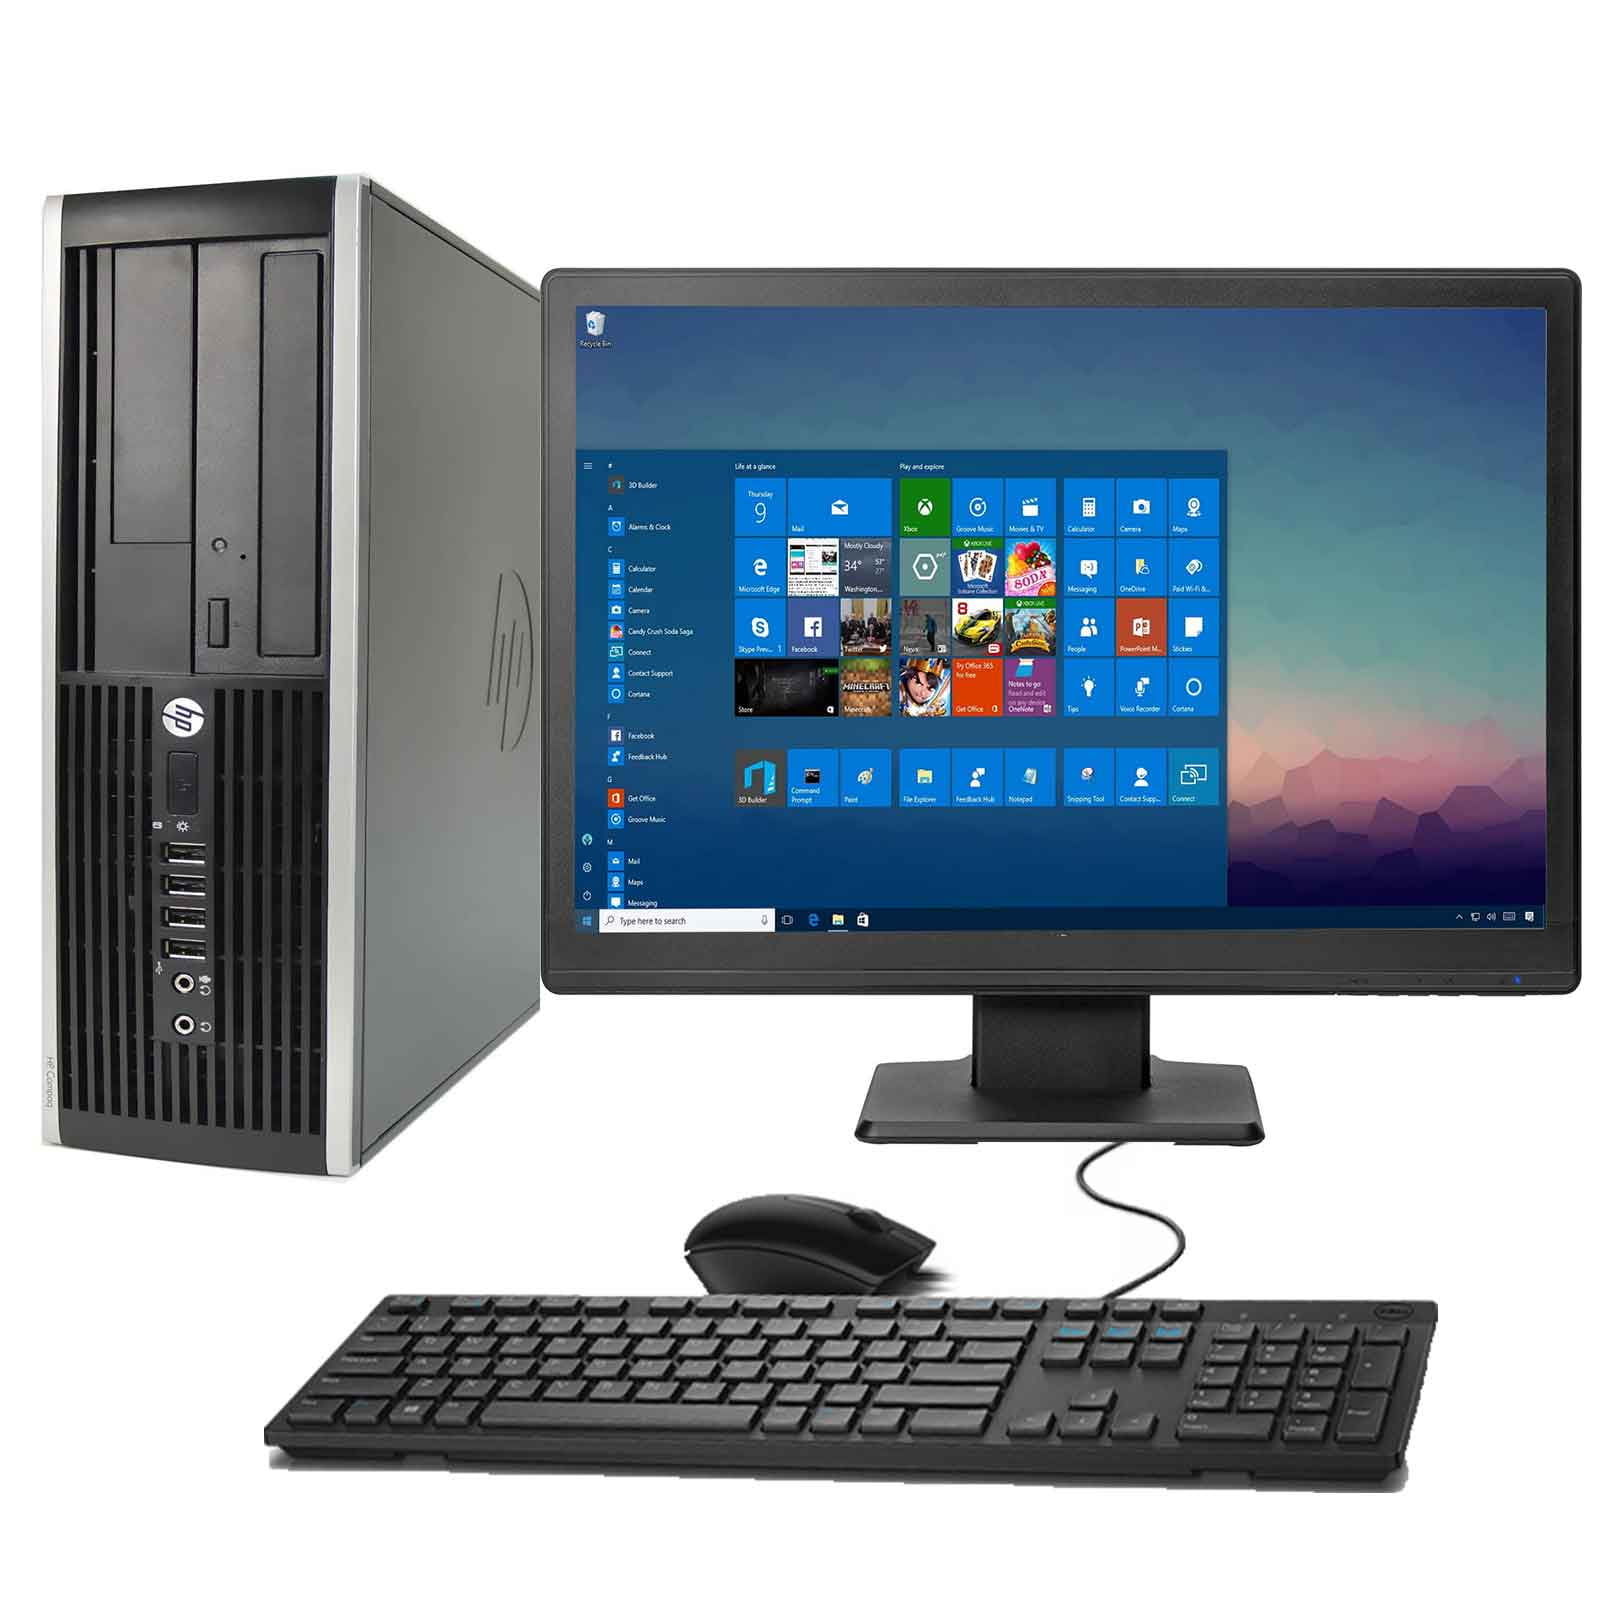 HP Desktop Tower PC System Windows 10 Dual Core Processor 4GB Ram